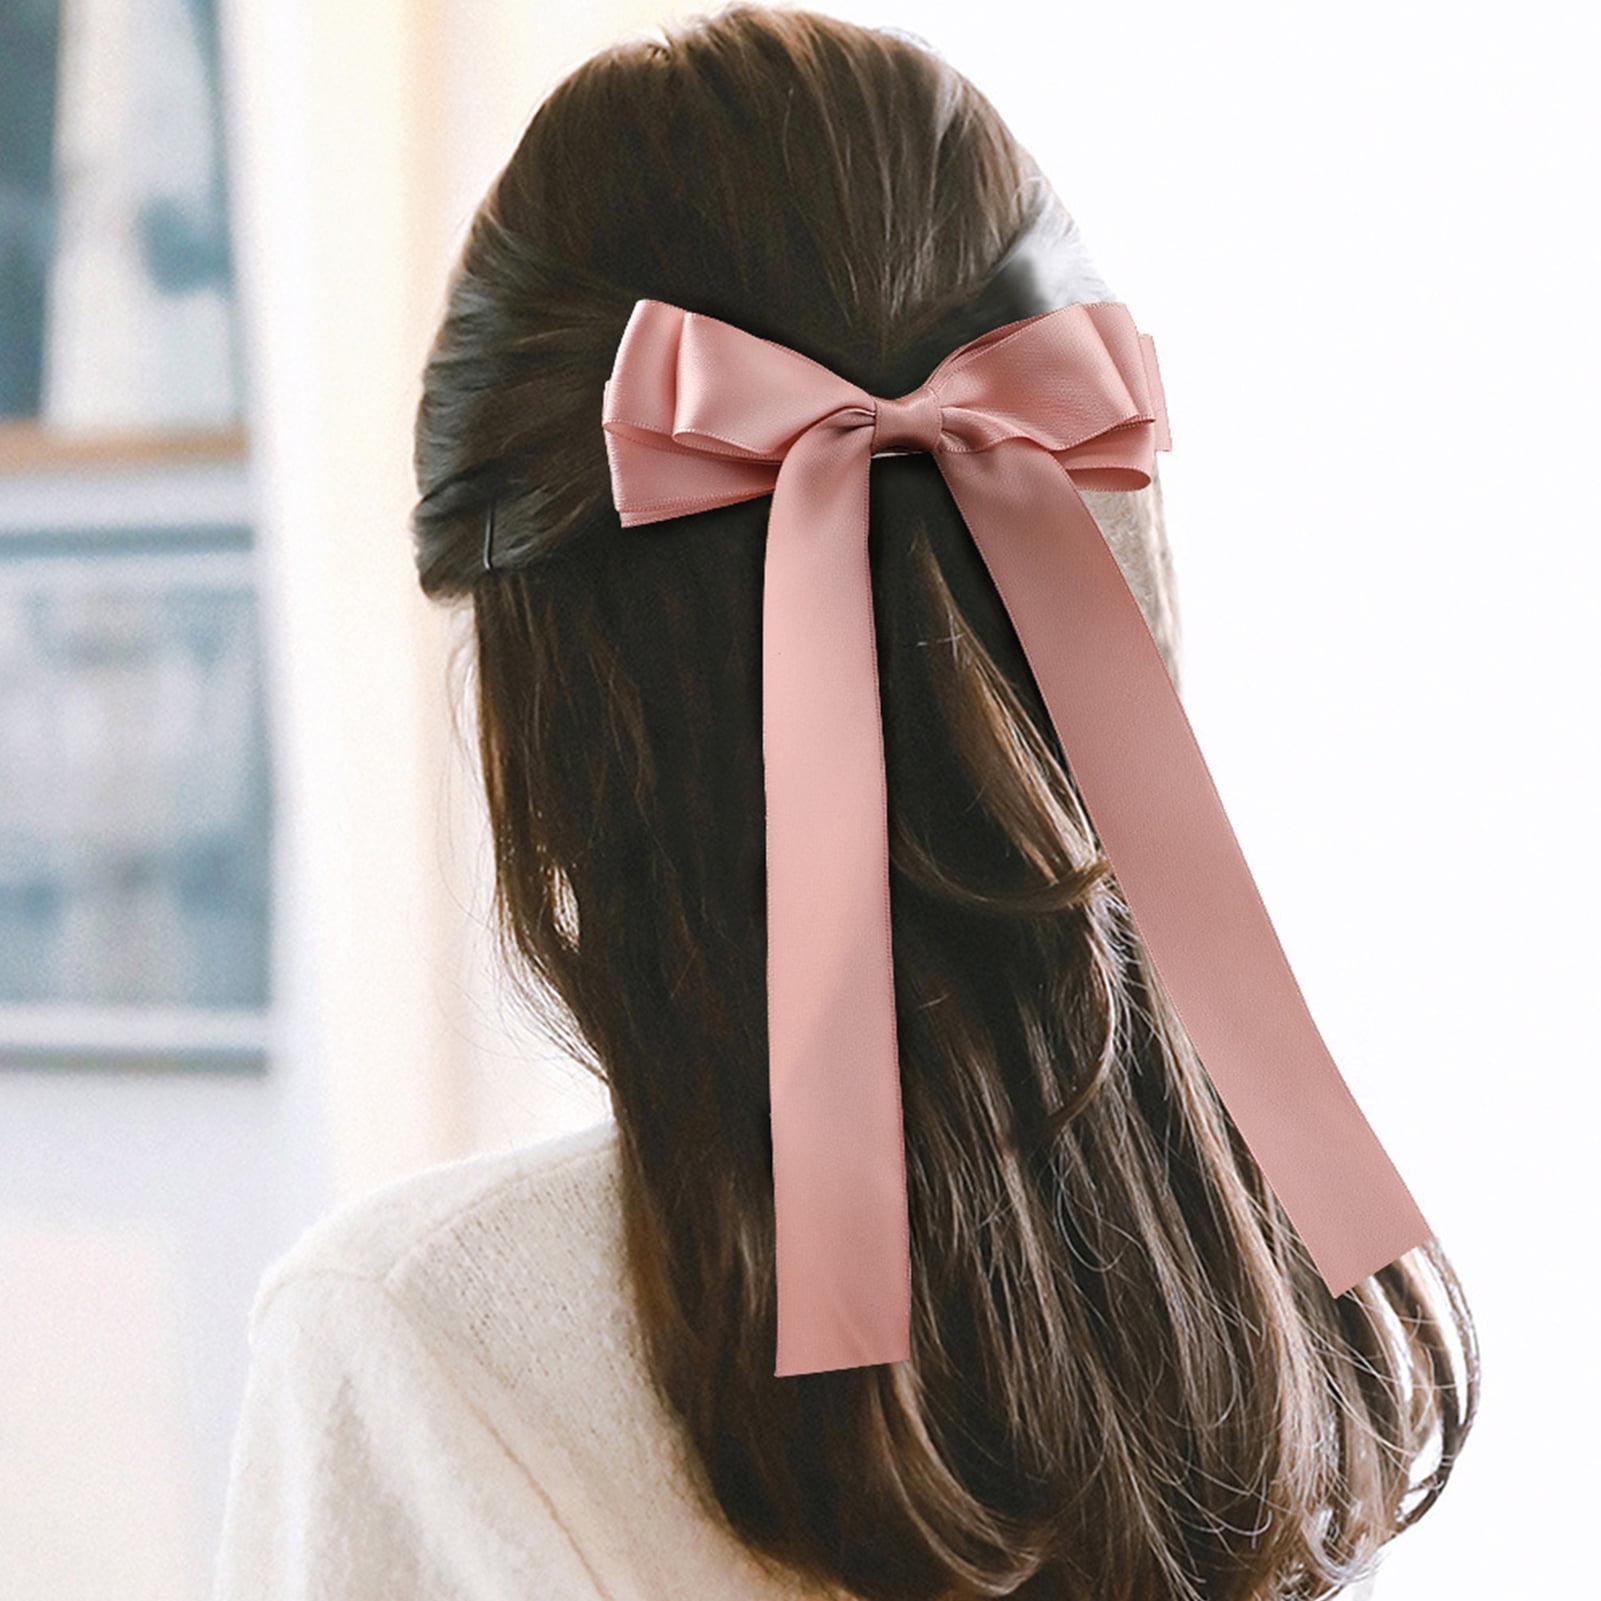 Light Pink Hair Bow, Pink Hair Bow Clip, Pink Hair Bow, Hair Bow